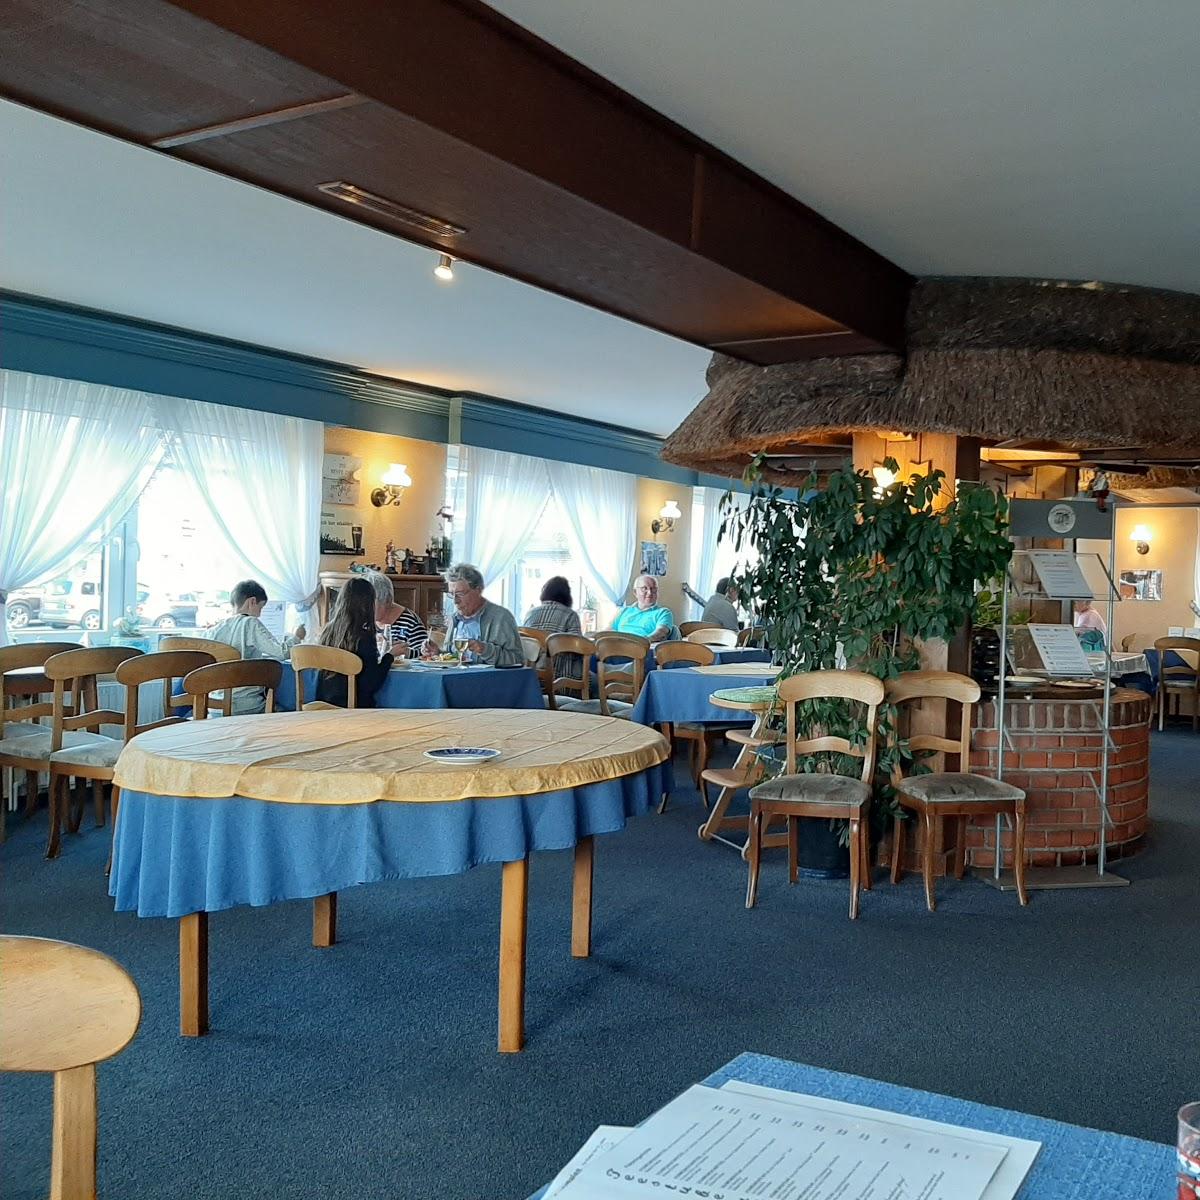 Restaurant "Teestube am Seedeich & Harlekin-Pub" in Neuharlingersiel